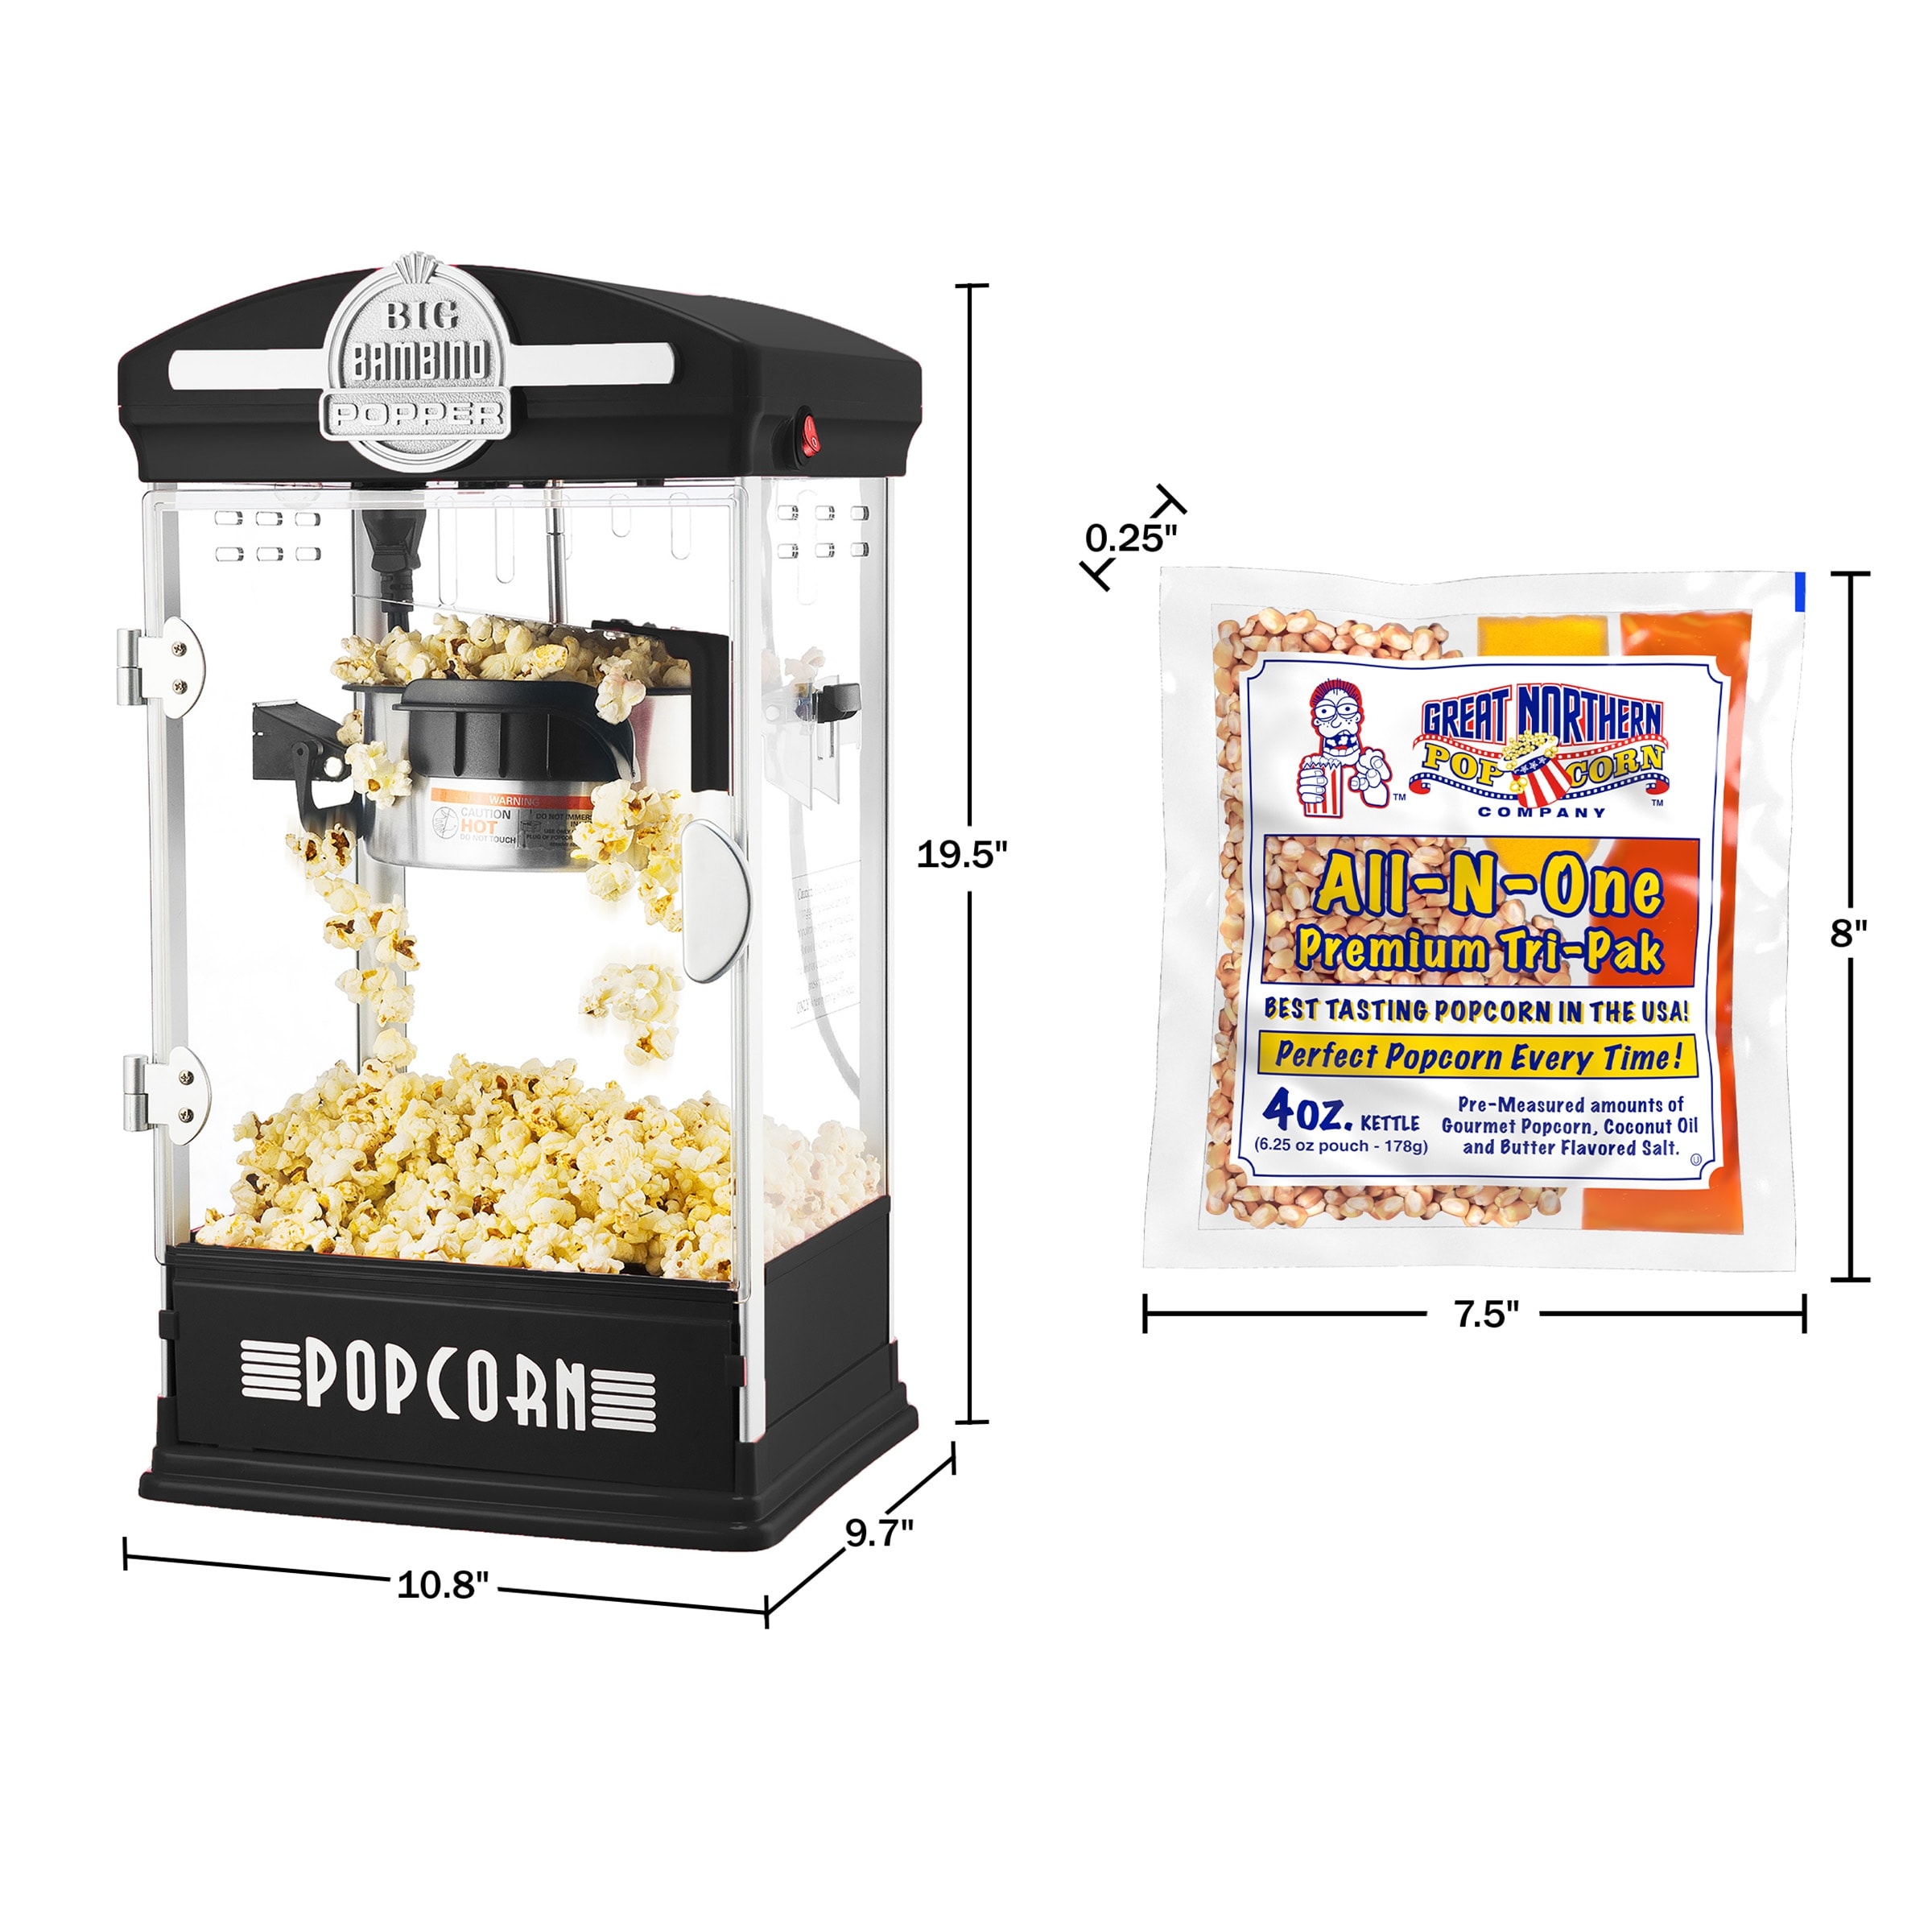 Big Bambino Popcorn Maker Set undefined Oz Kettle with 24-Pack of  Pre-Measured Popcorn Kernel Packs by Great Northern Popcorn (Black) On  Sale Bed Bath  Beyond 36787983